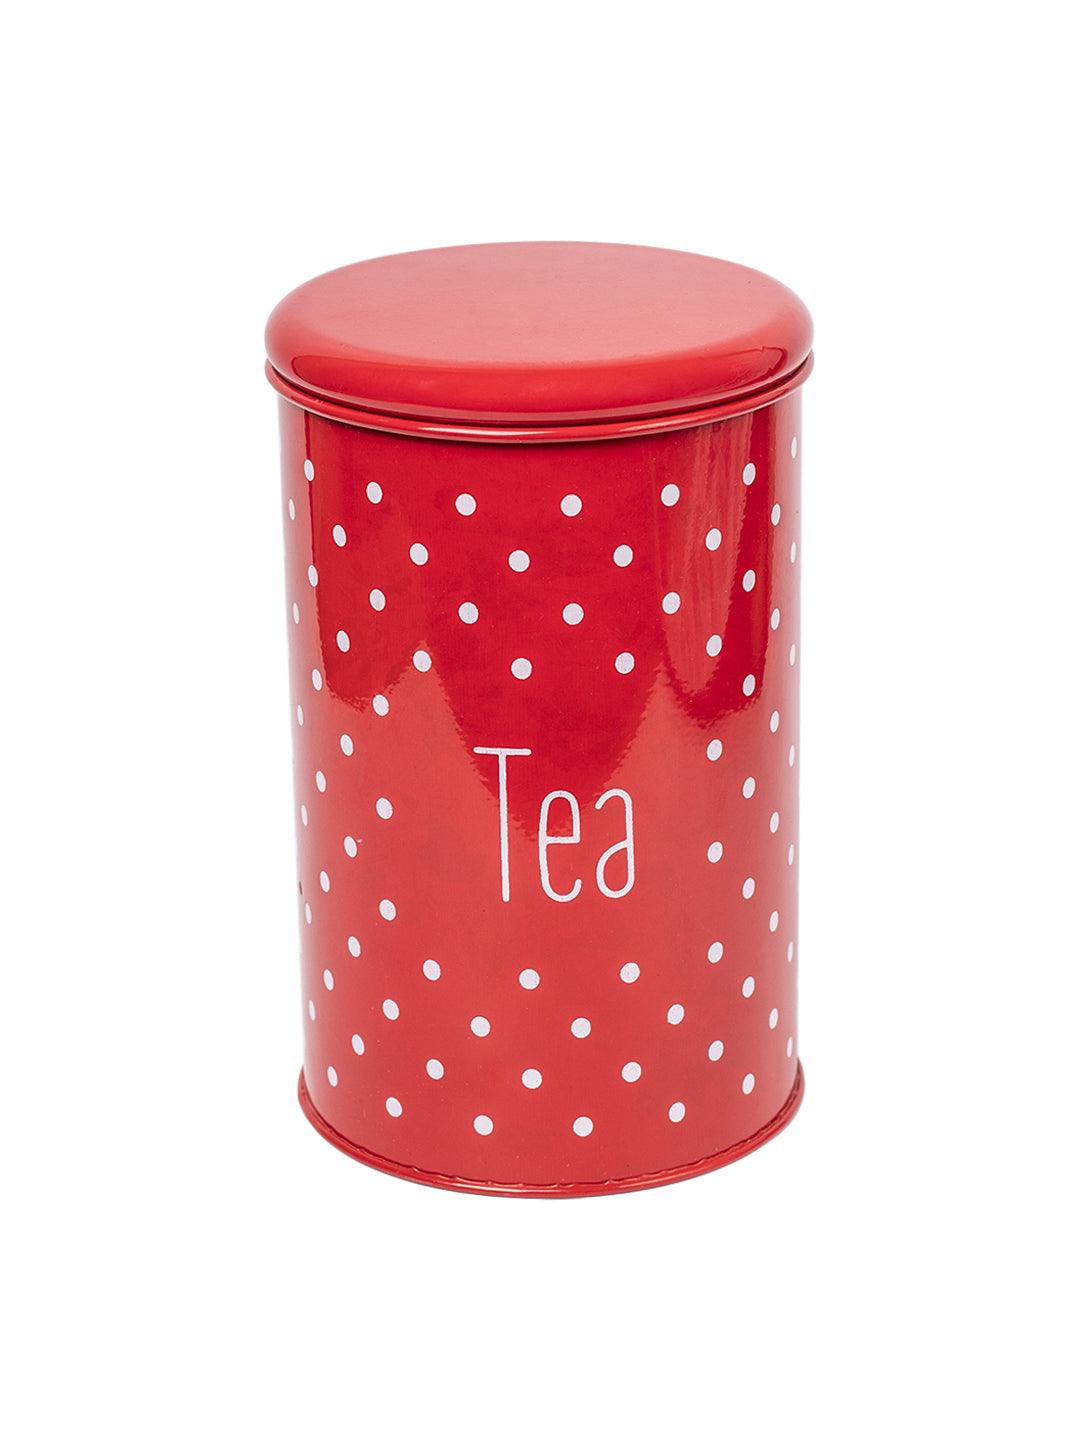 Stylish Red Tea Jar - MARKET 99